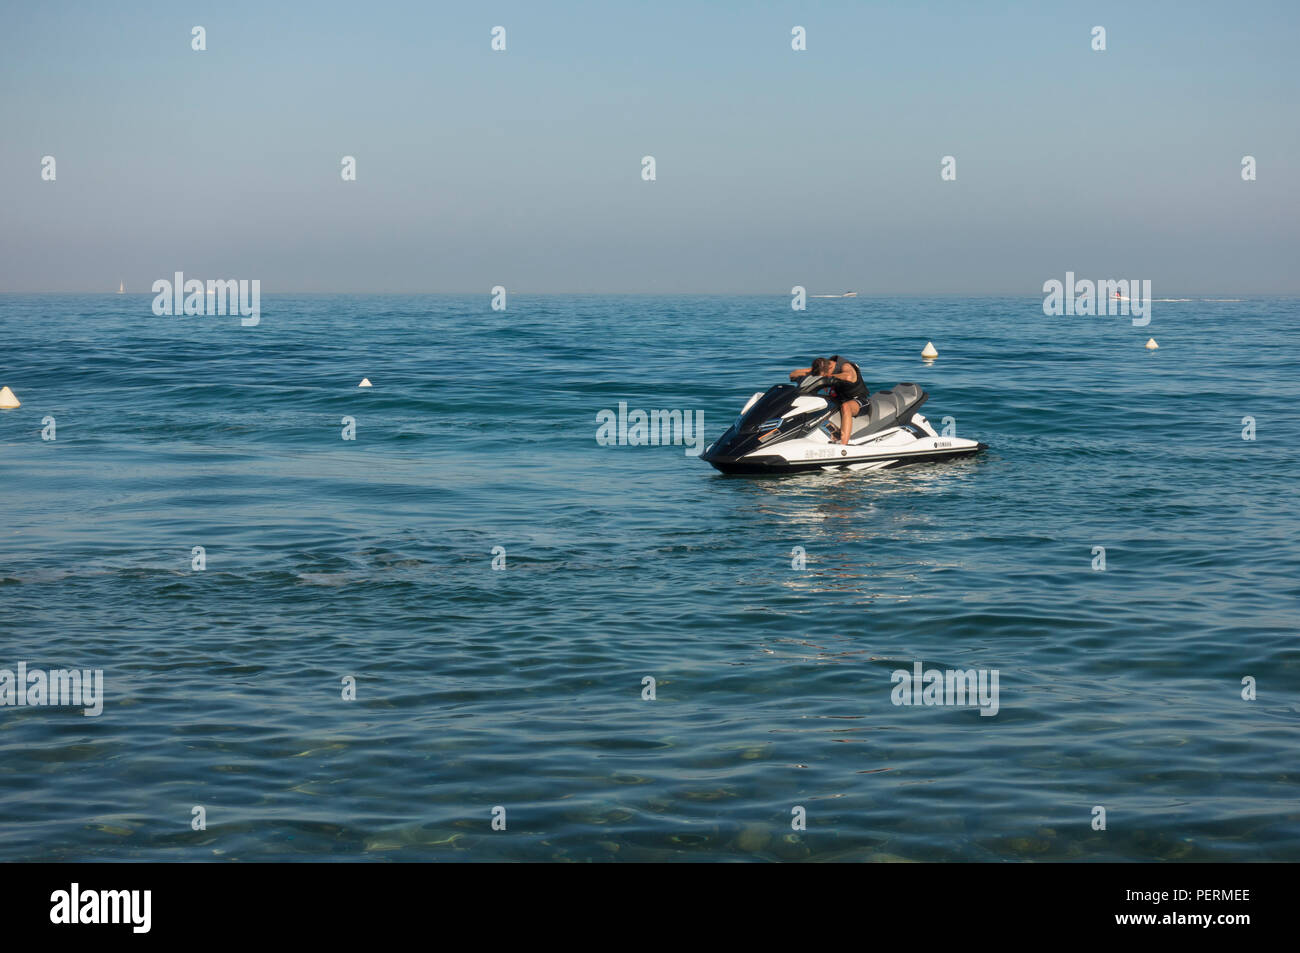 Jet ski being prepared at mediterranean sea, San Pedro, Marbella, Spain. Stock Photo